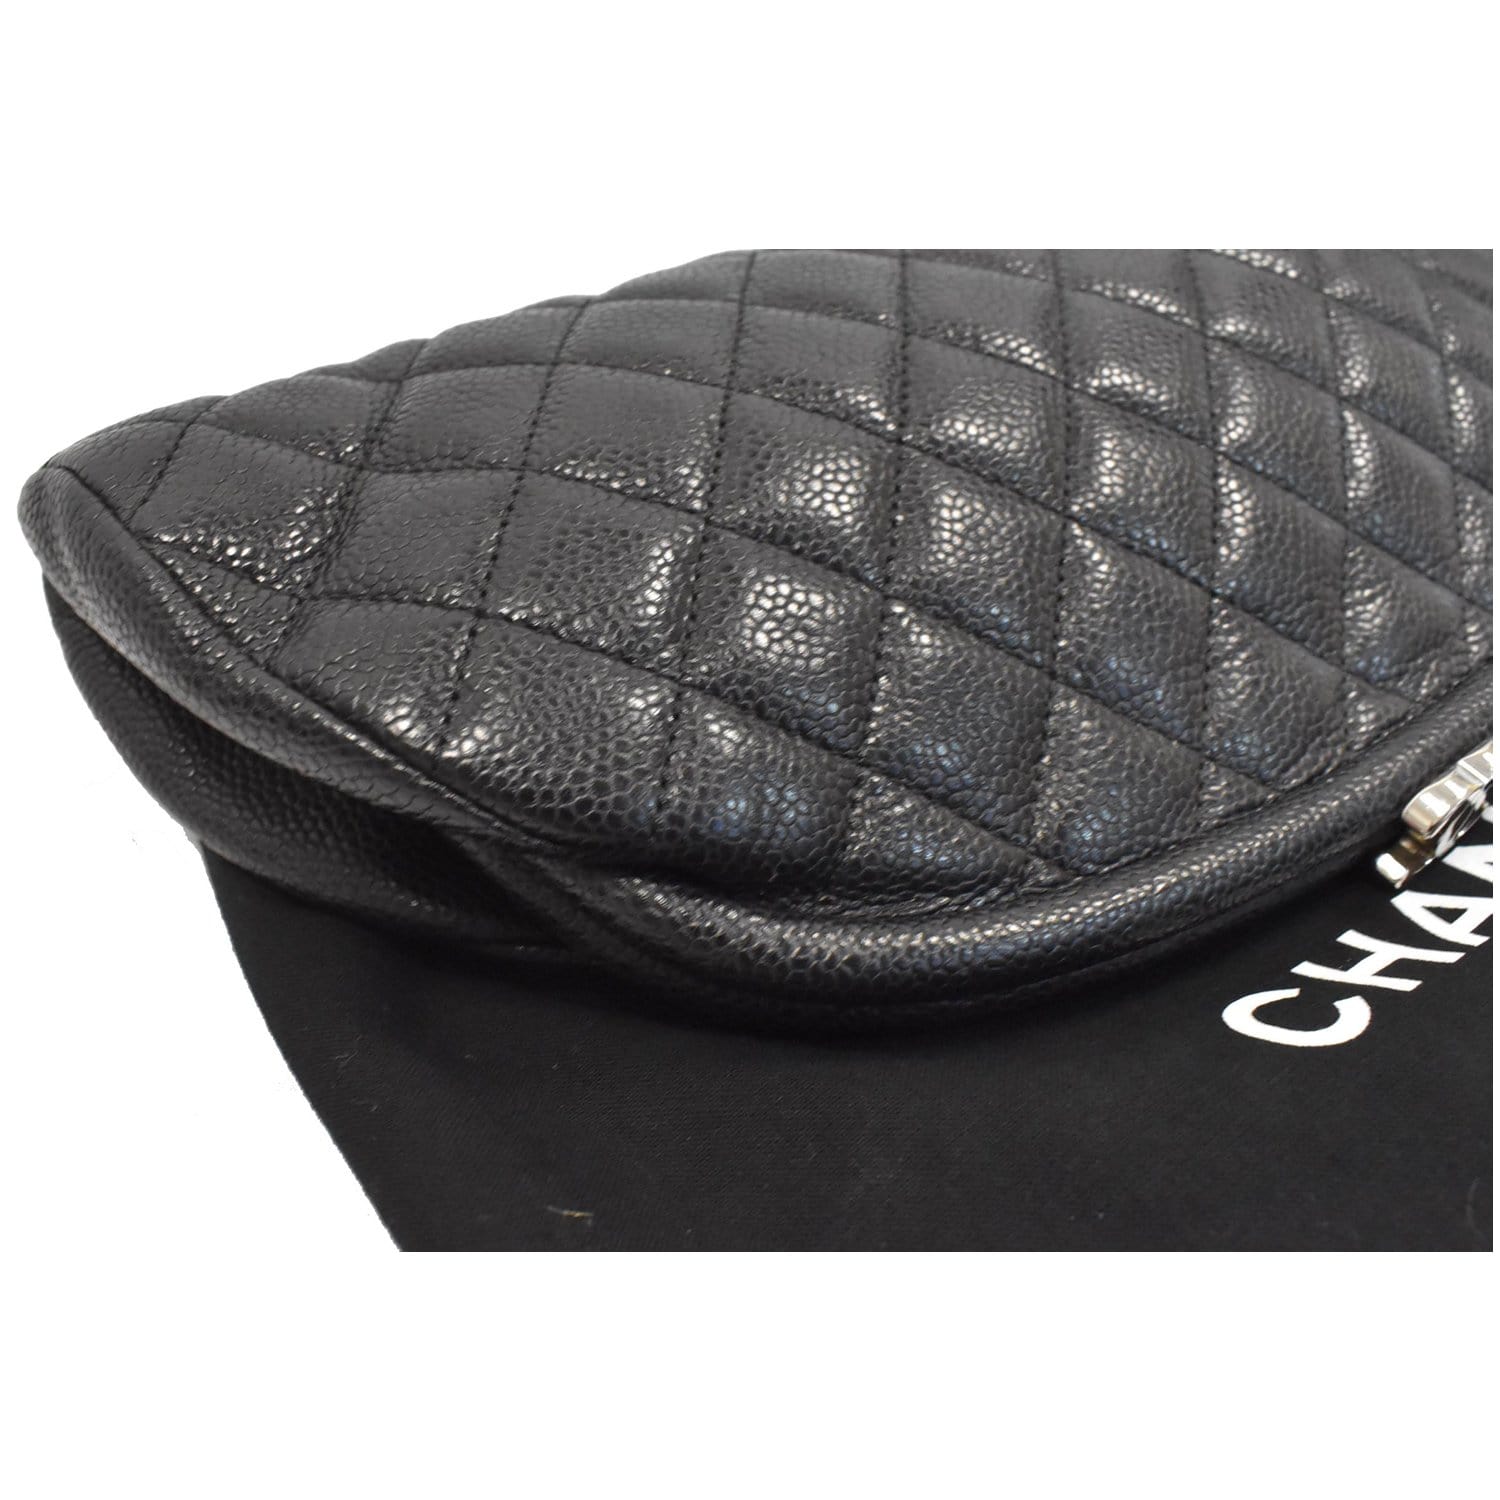 Chanel Black Quilted Lambskin Clutch Q6B04N1IKB014